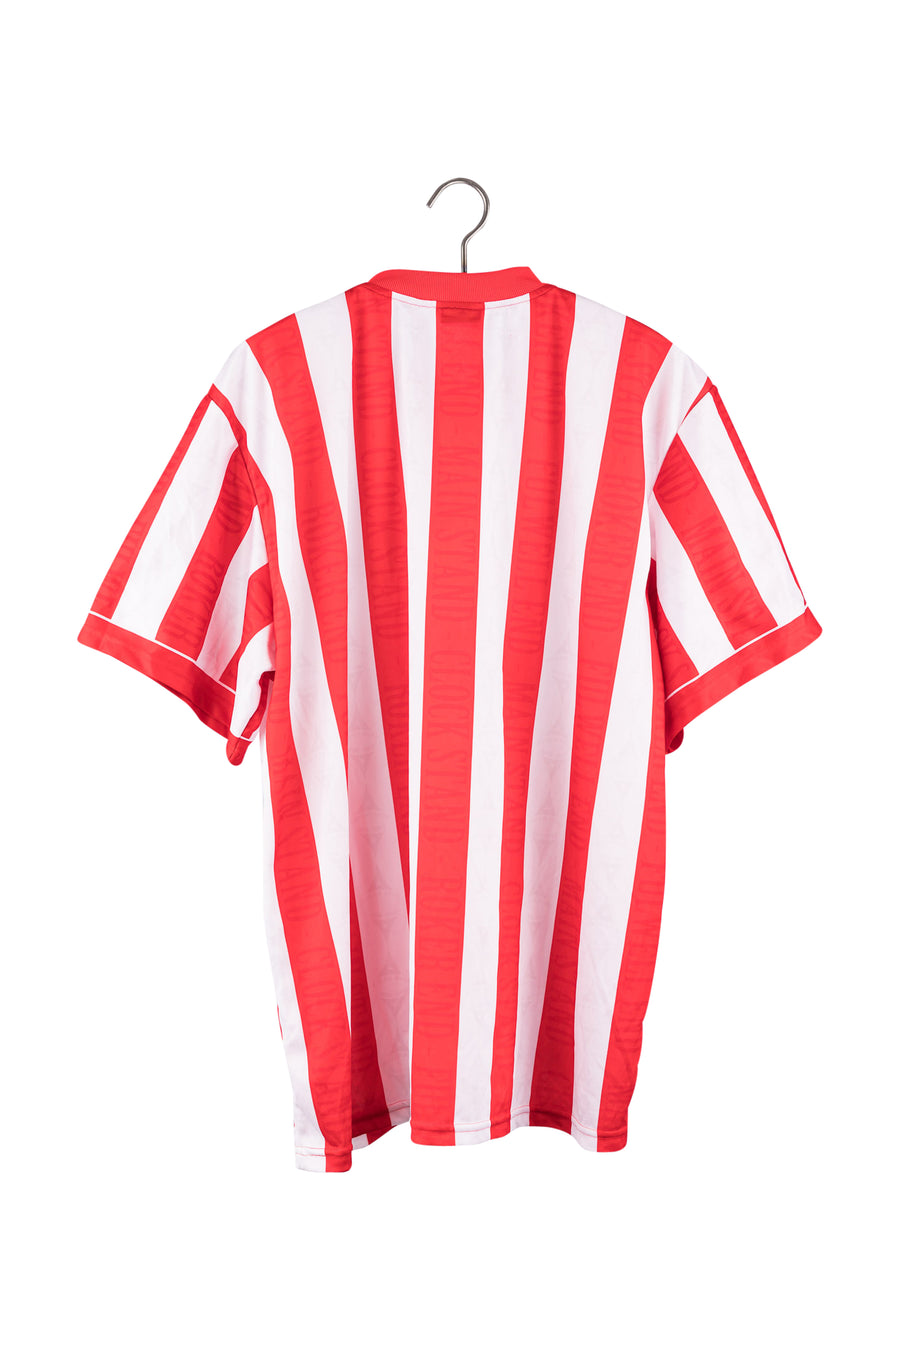 Sunderland 1996 - 1997 Home Football Shirt